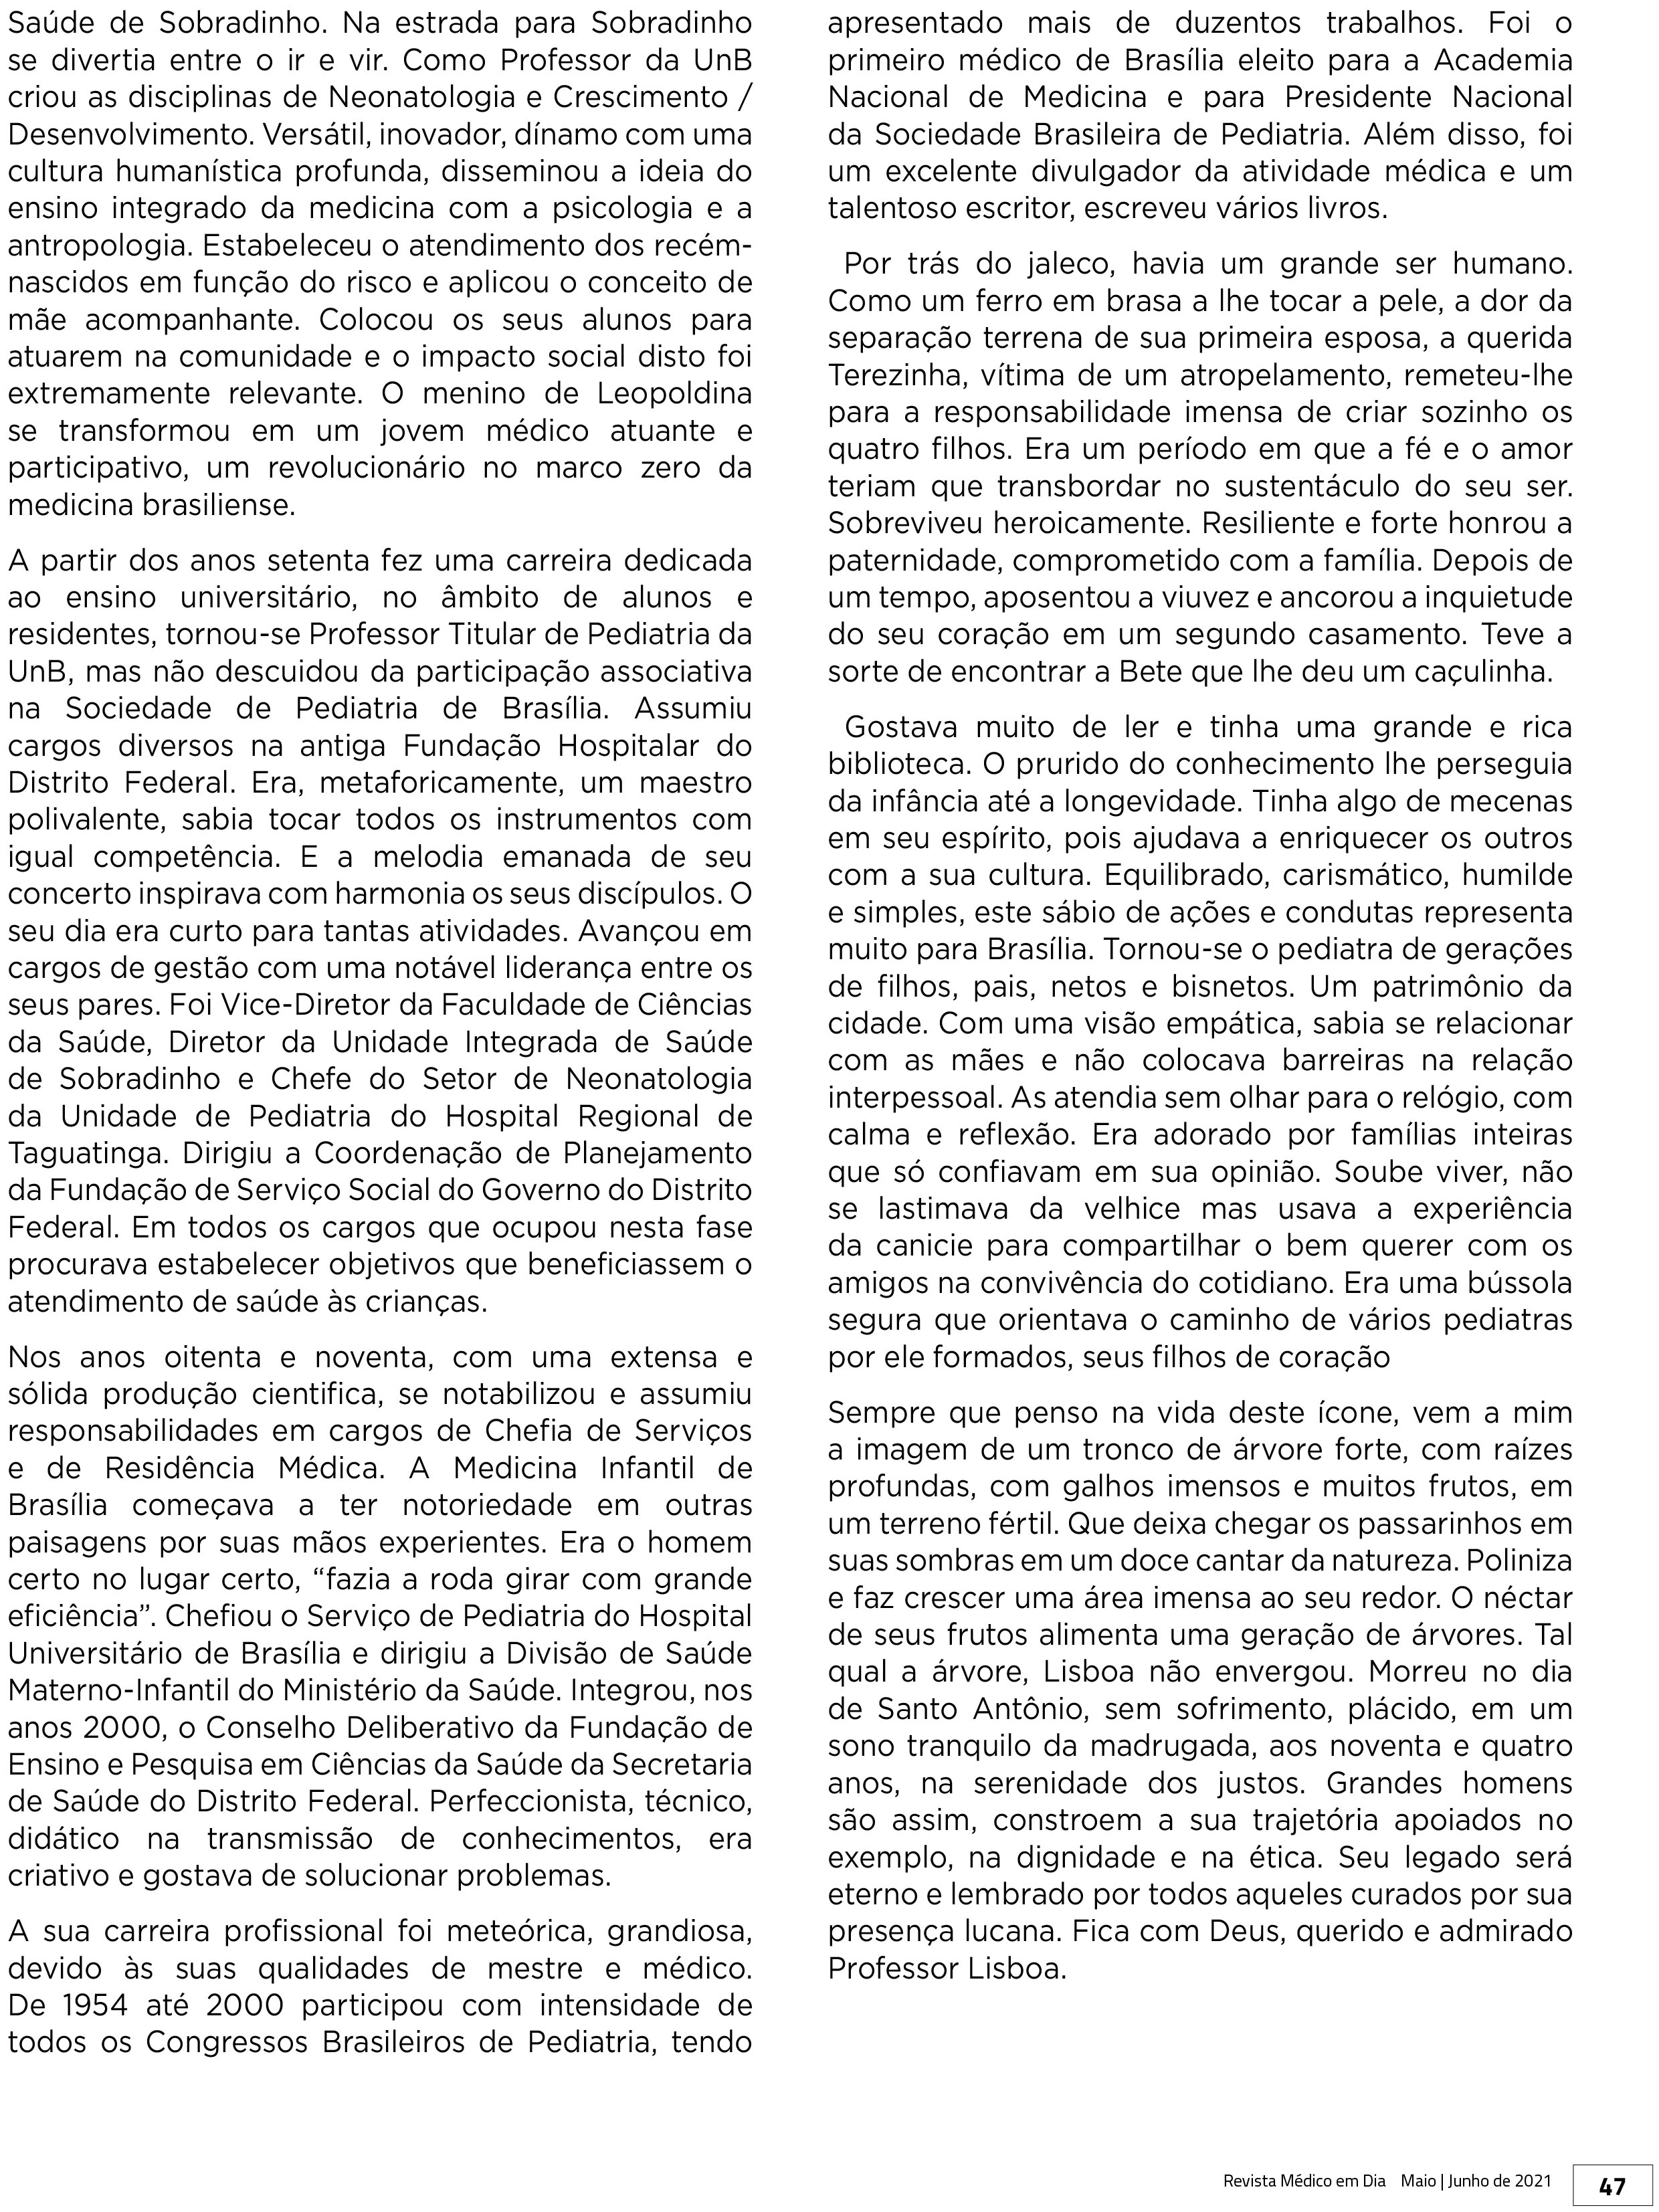 RevistaMedicoemDia 196   professorlisboa2